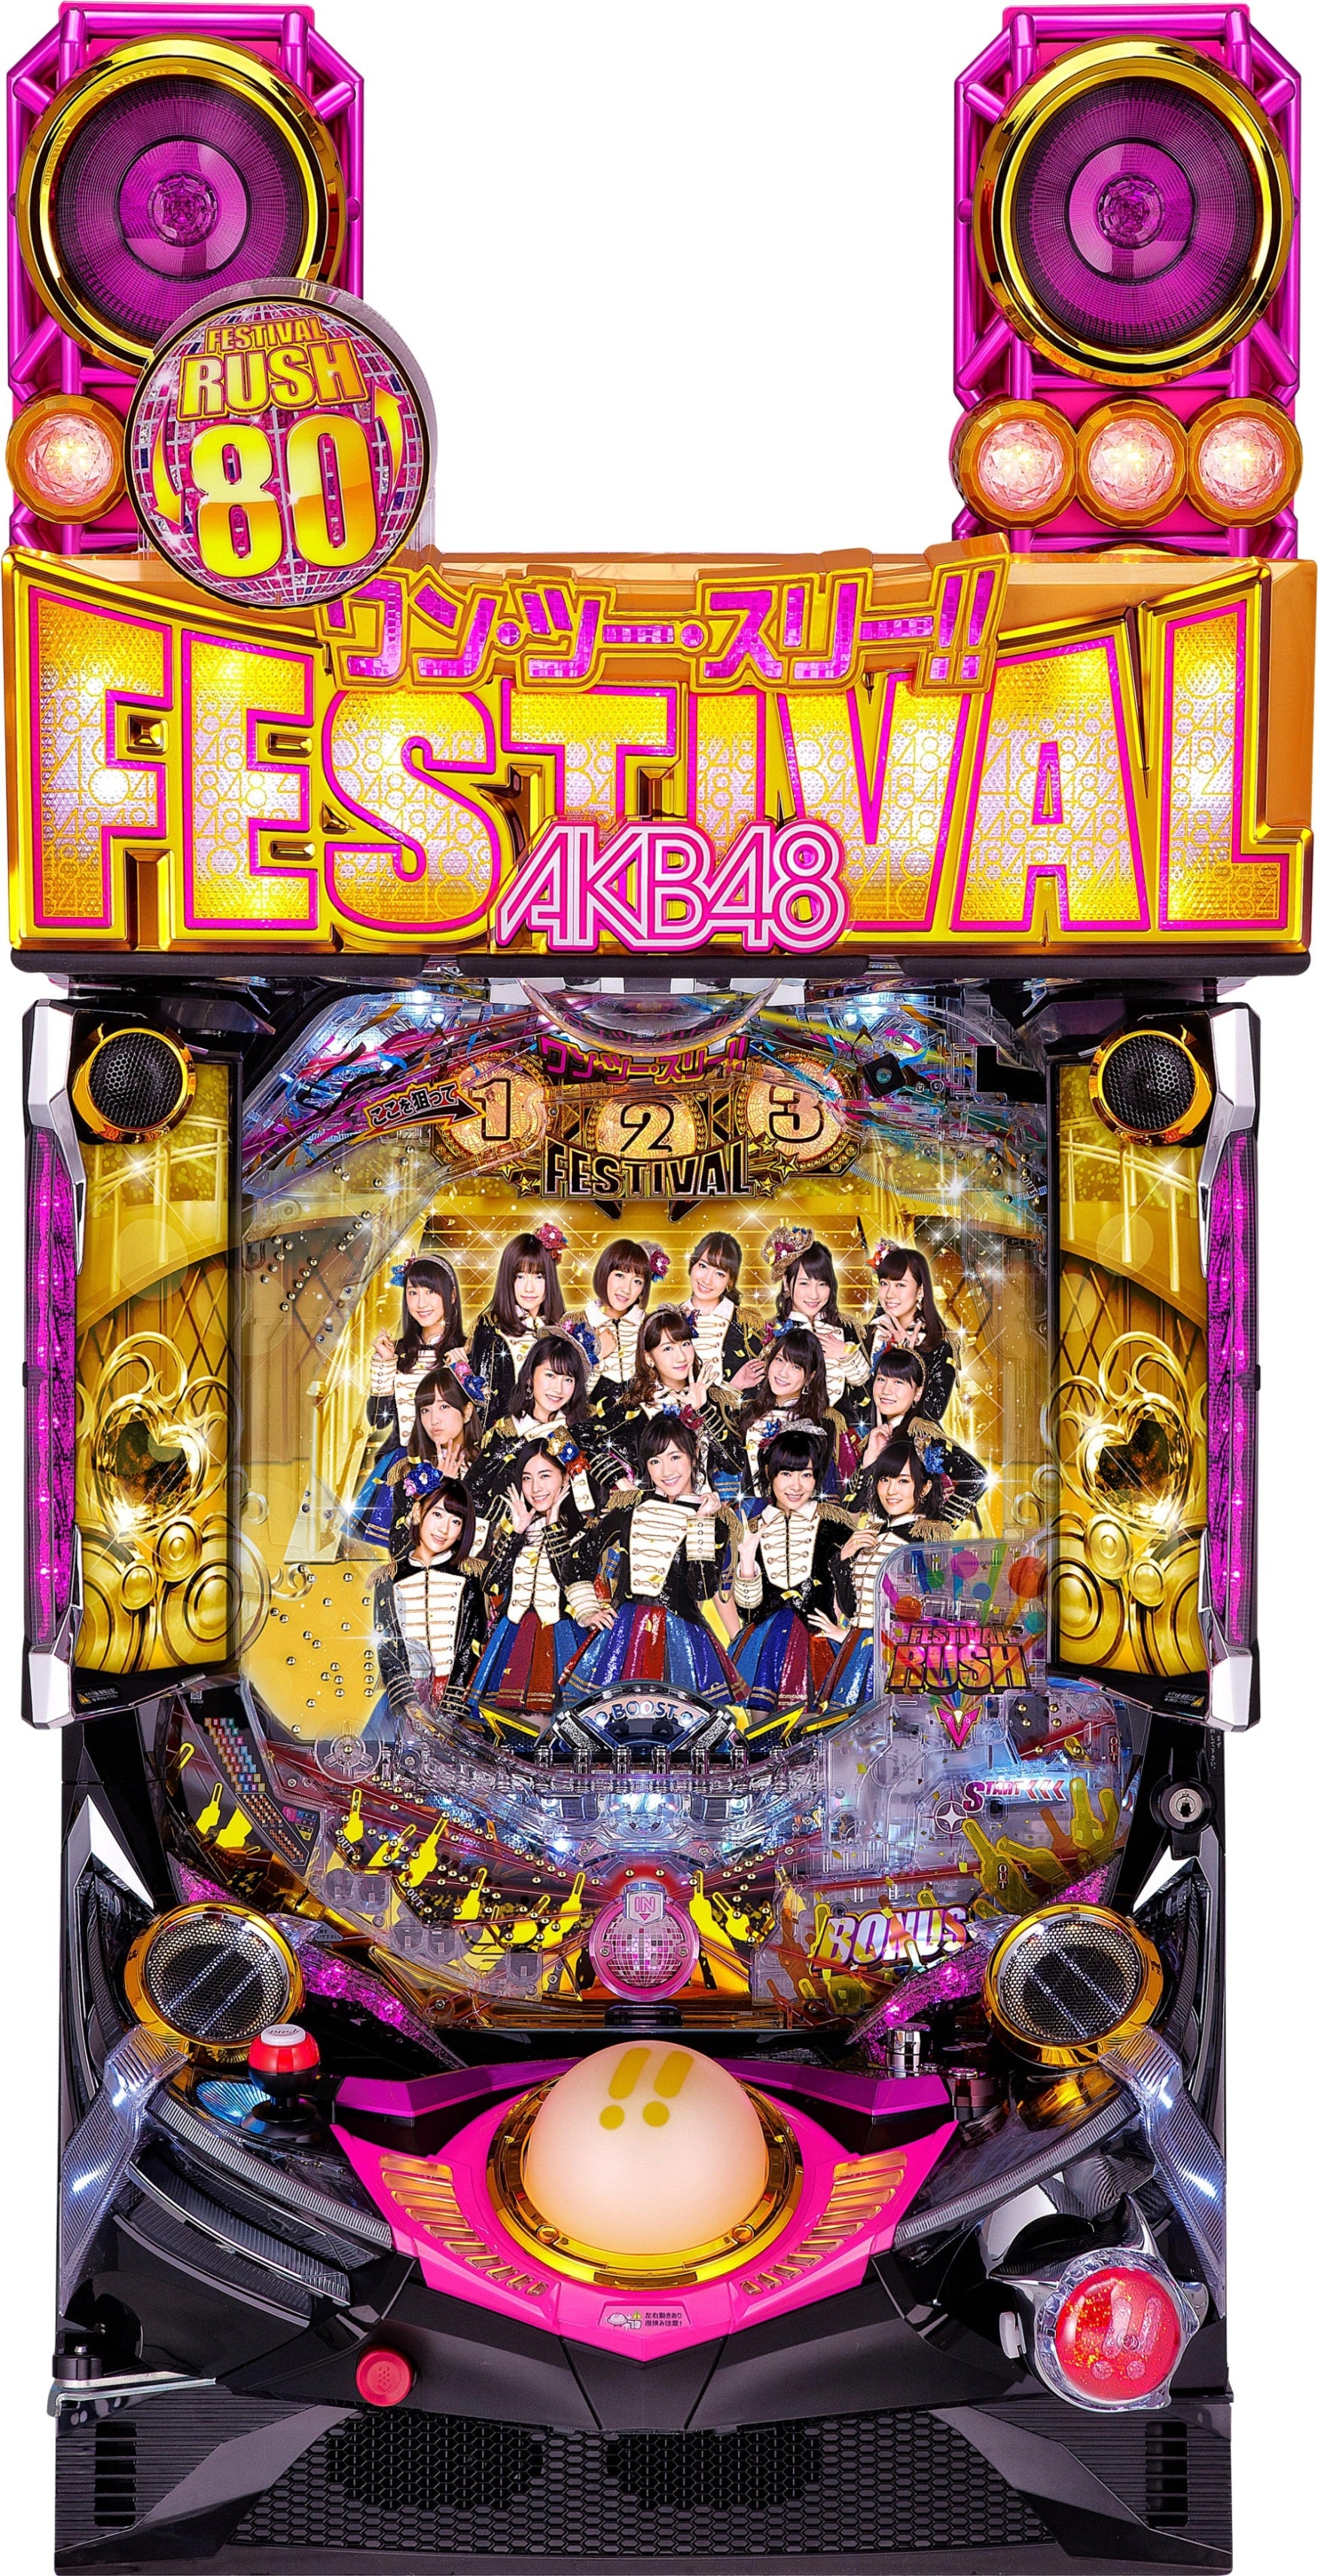 AKB48 - One Two Three Festival